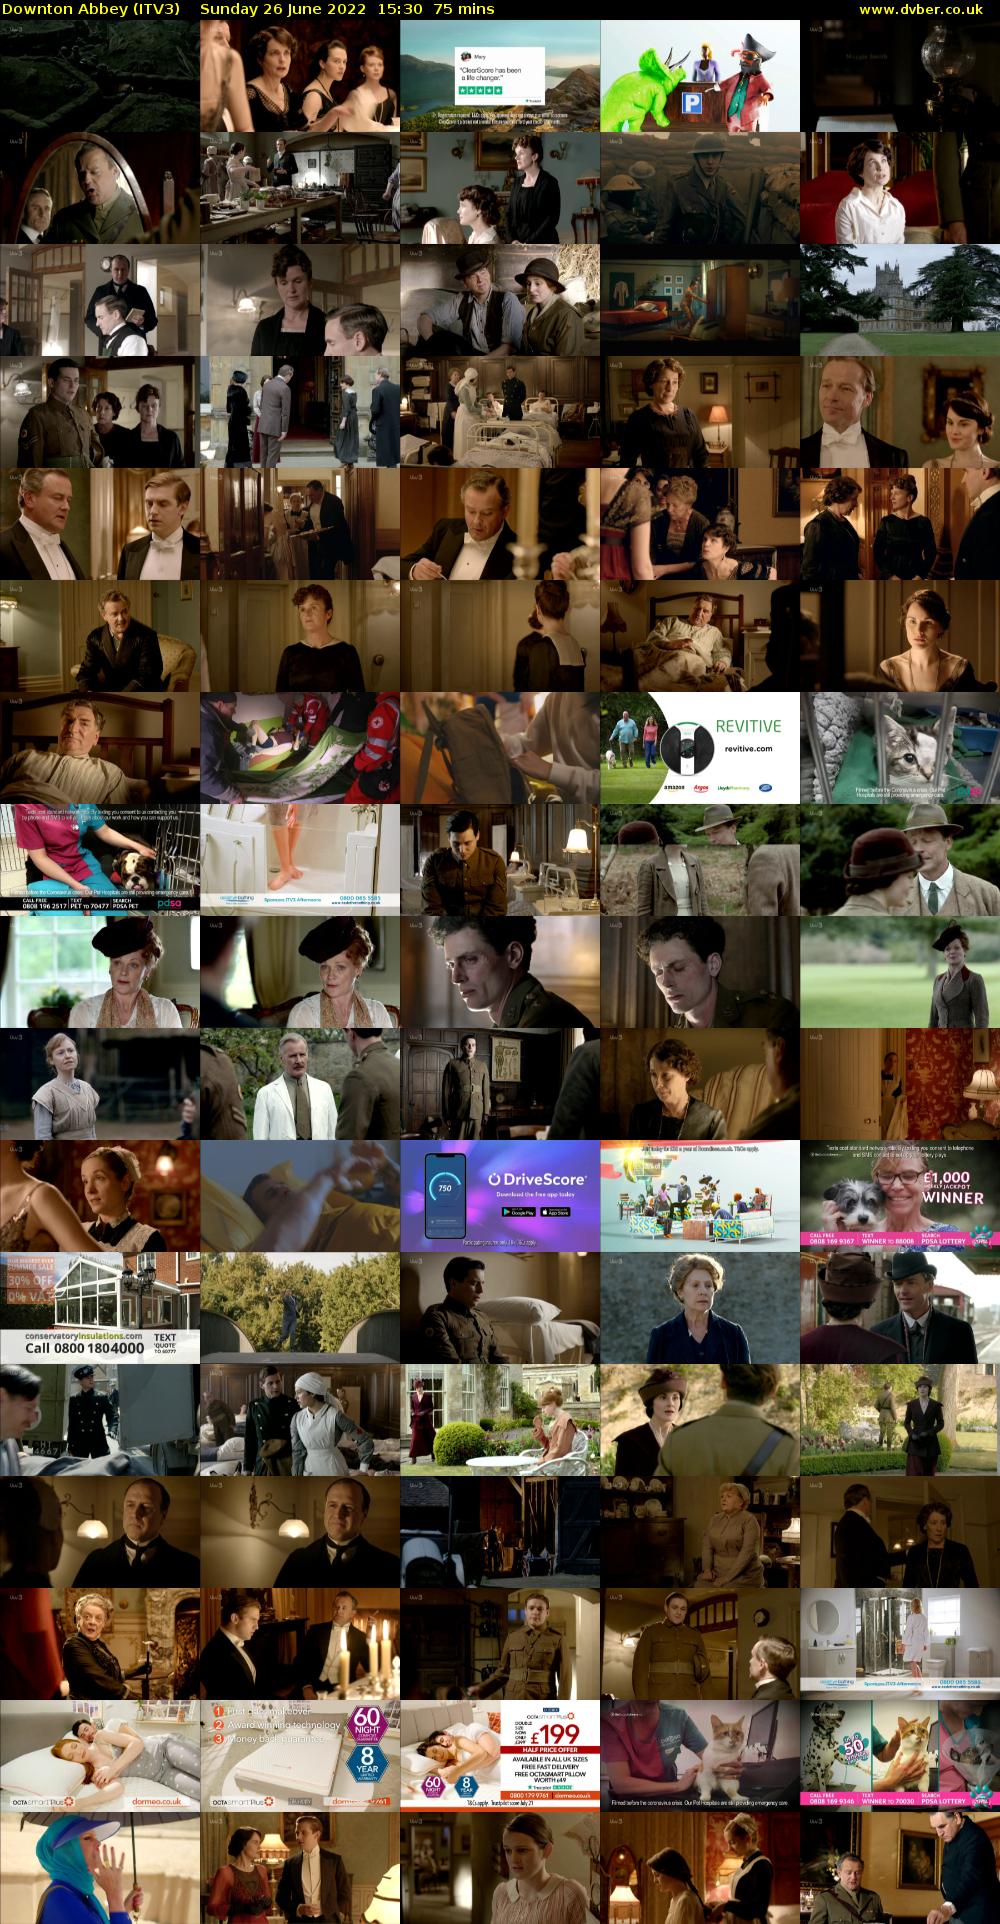 Downton Abbey (ITV3) Sunday 26 June 2022 15:30 - 16:45